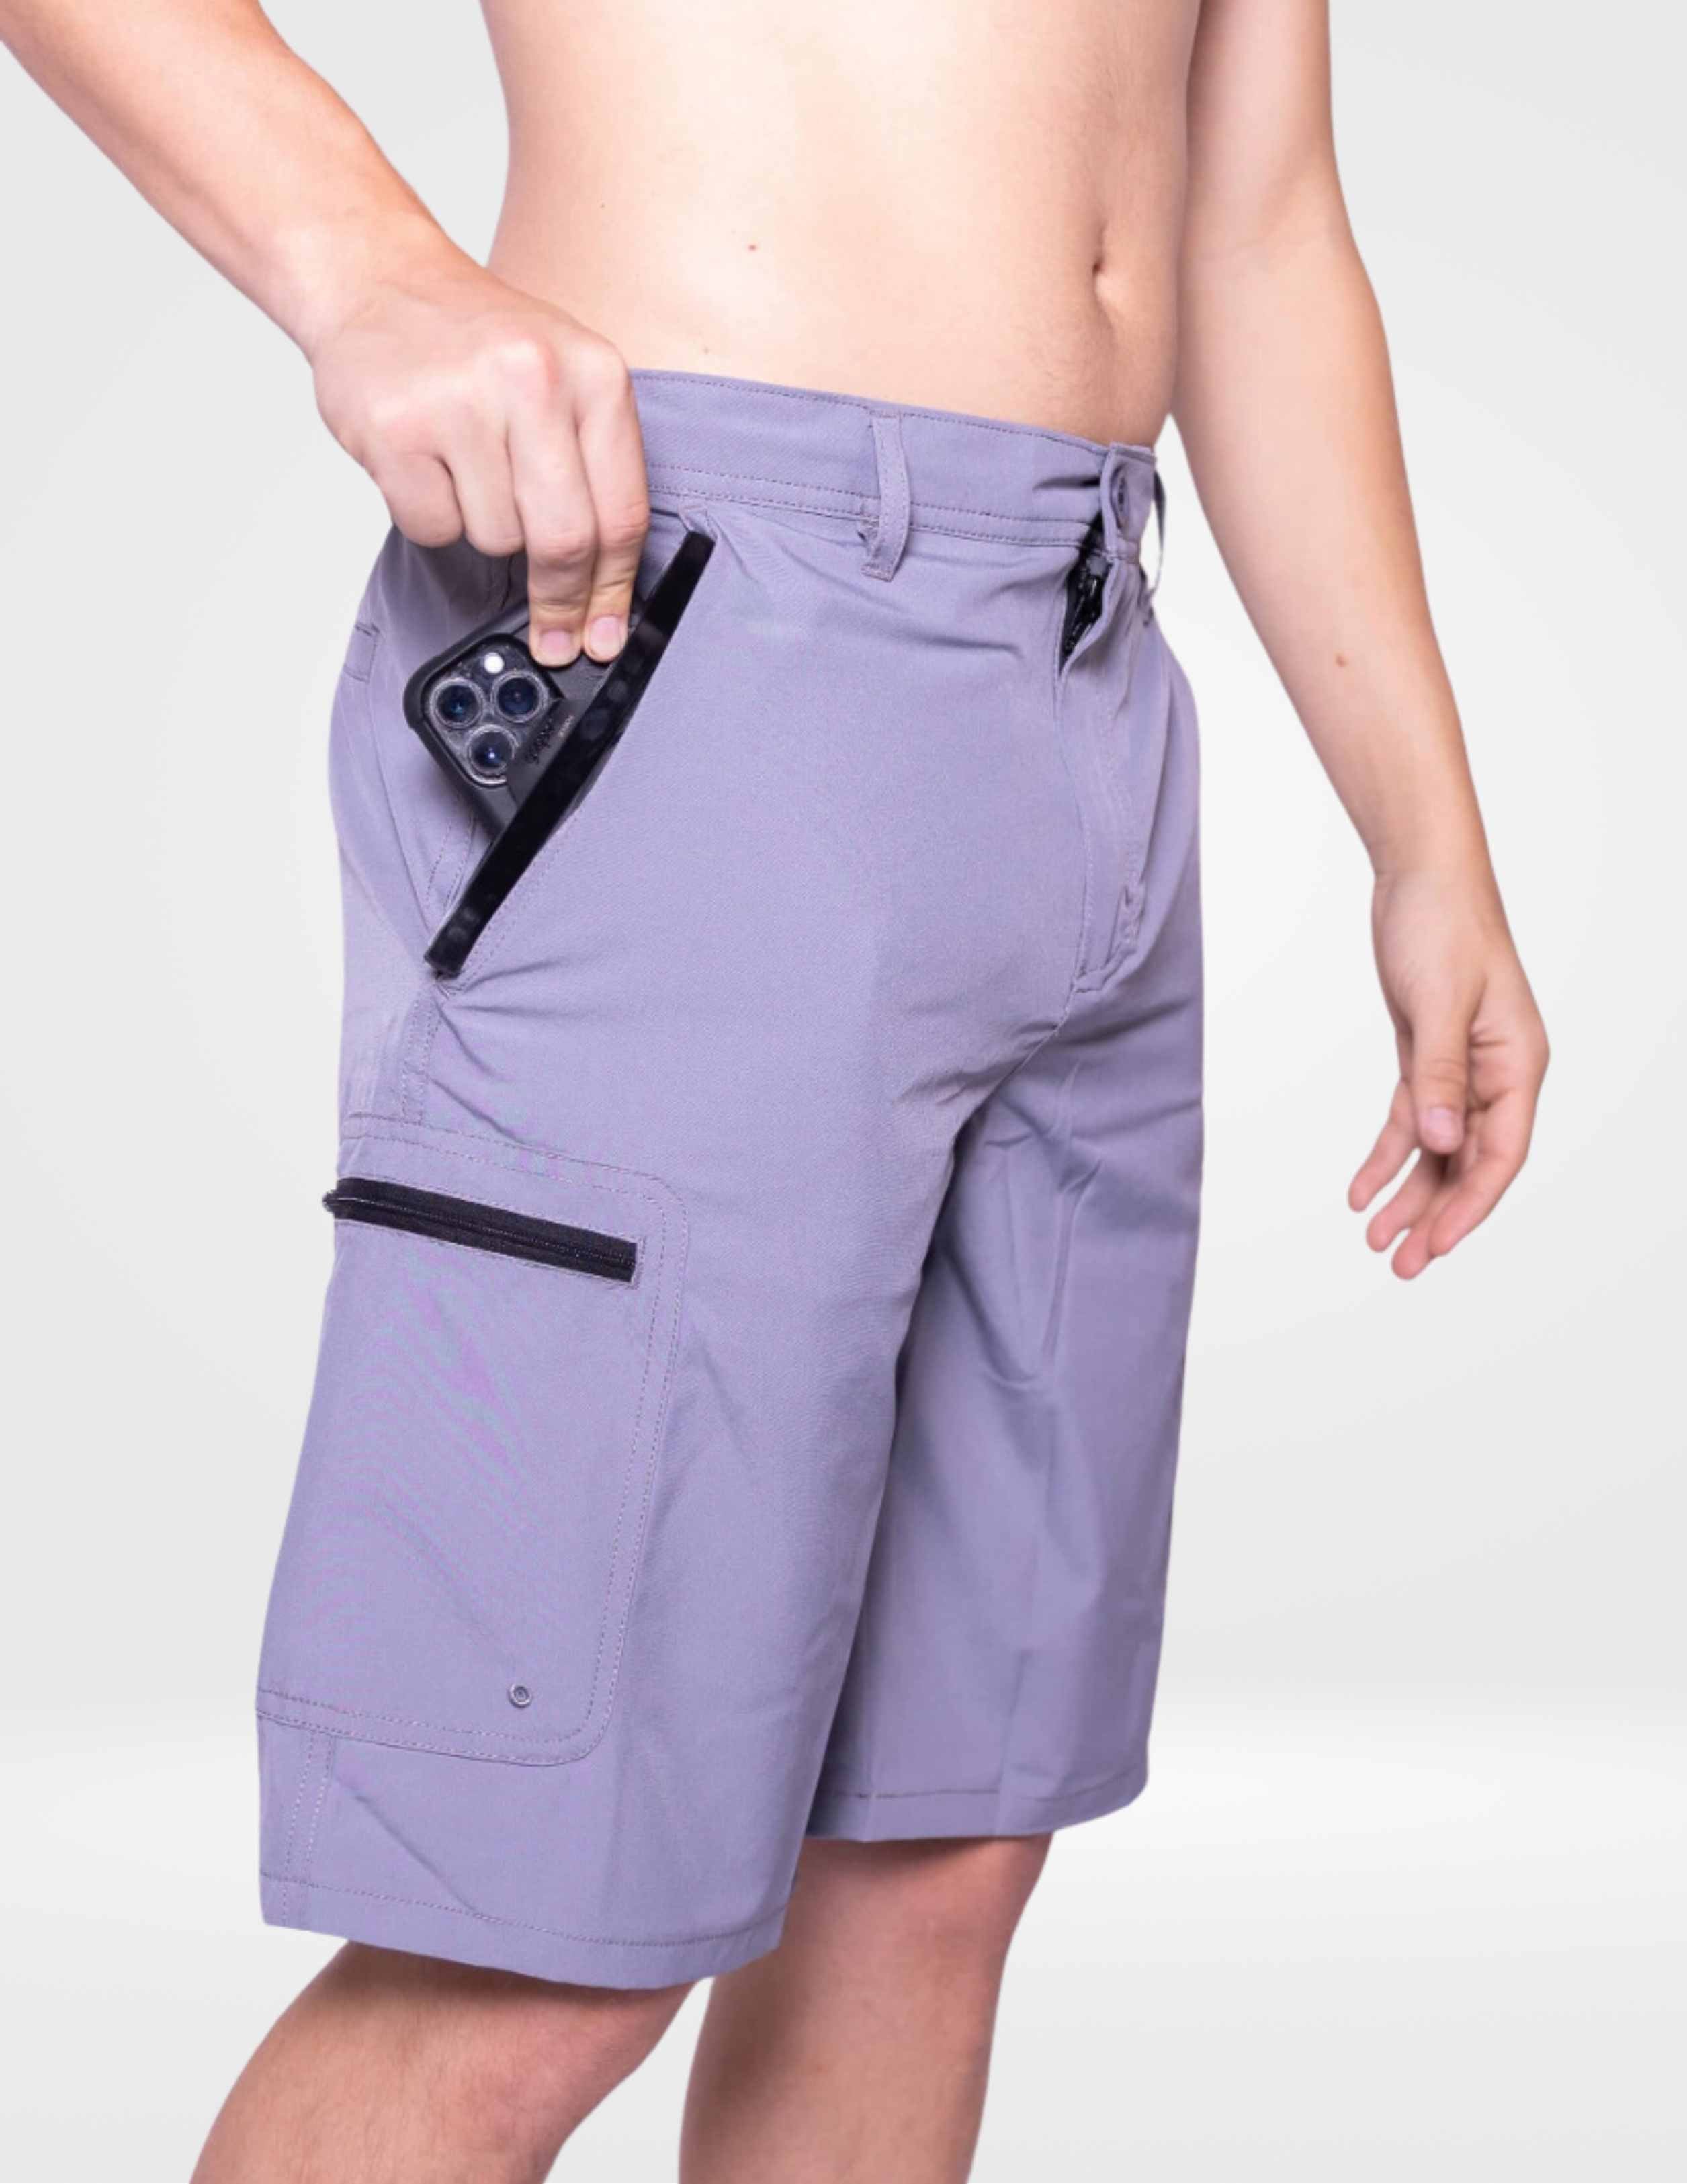 Waterproof Hybrid Shorts with Waterproof Pocket XL 42-45